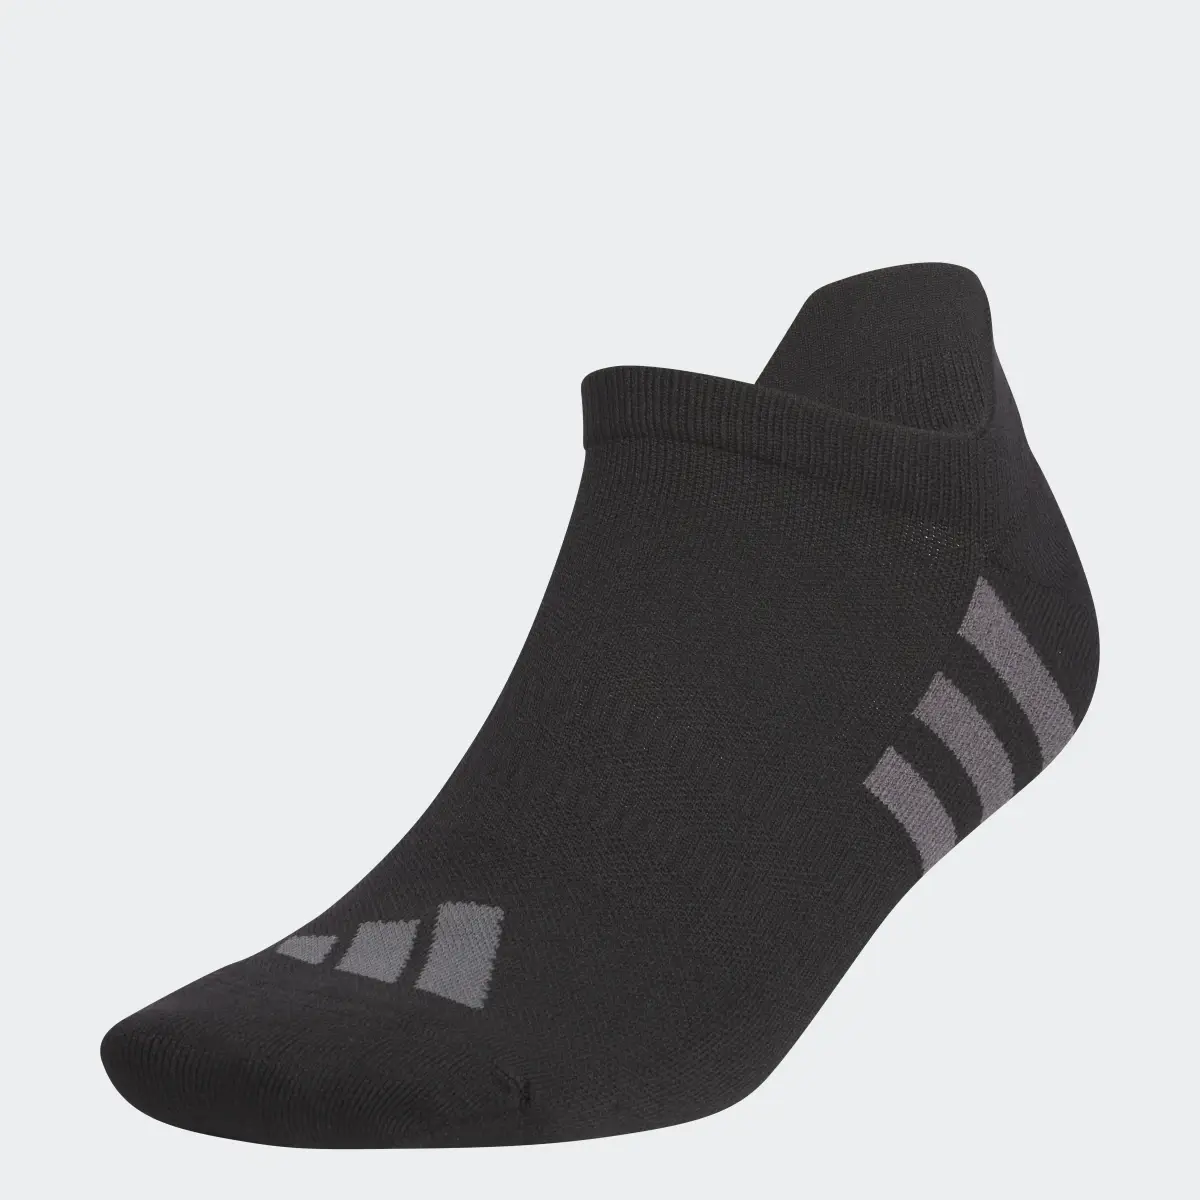 Adidas Tour Ankle Socks. 1